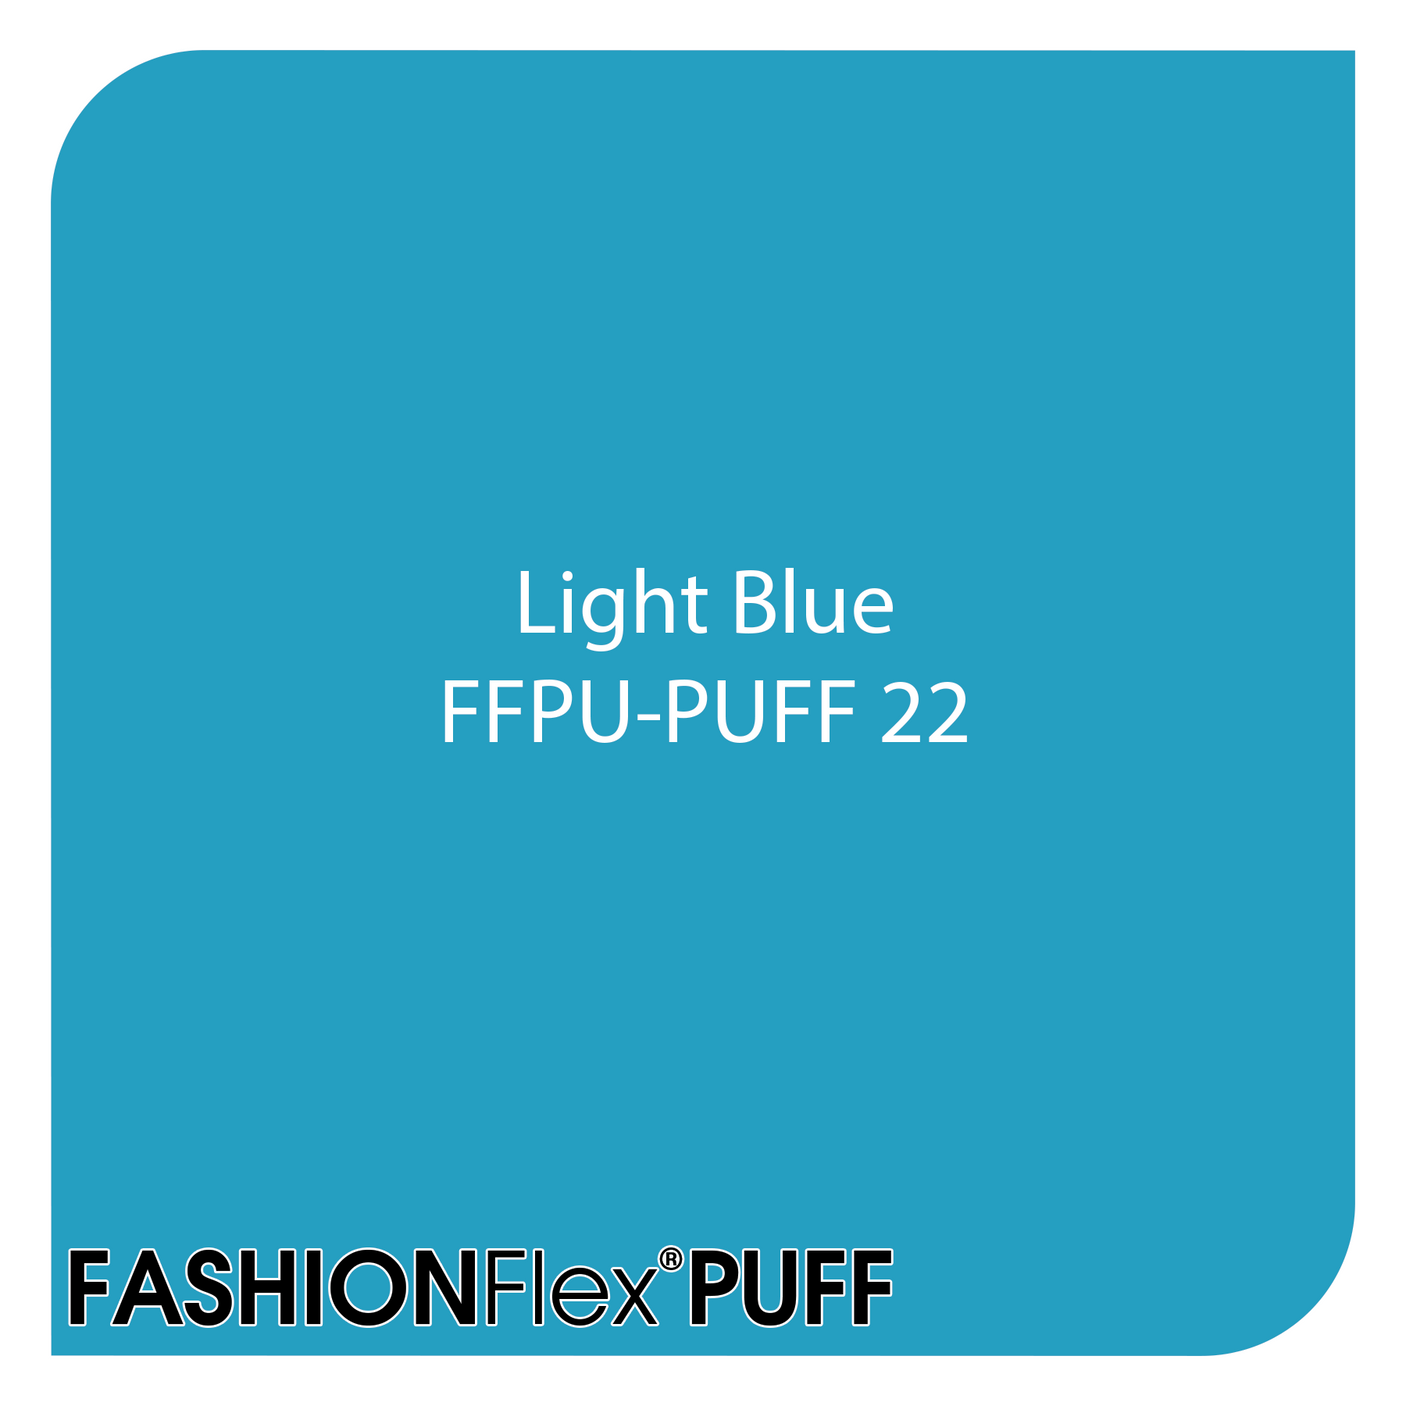 FASHIONFLEX® PUFF - 12" x 20" Sheet